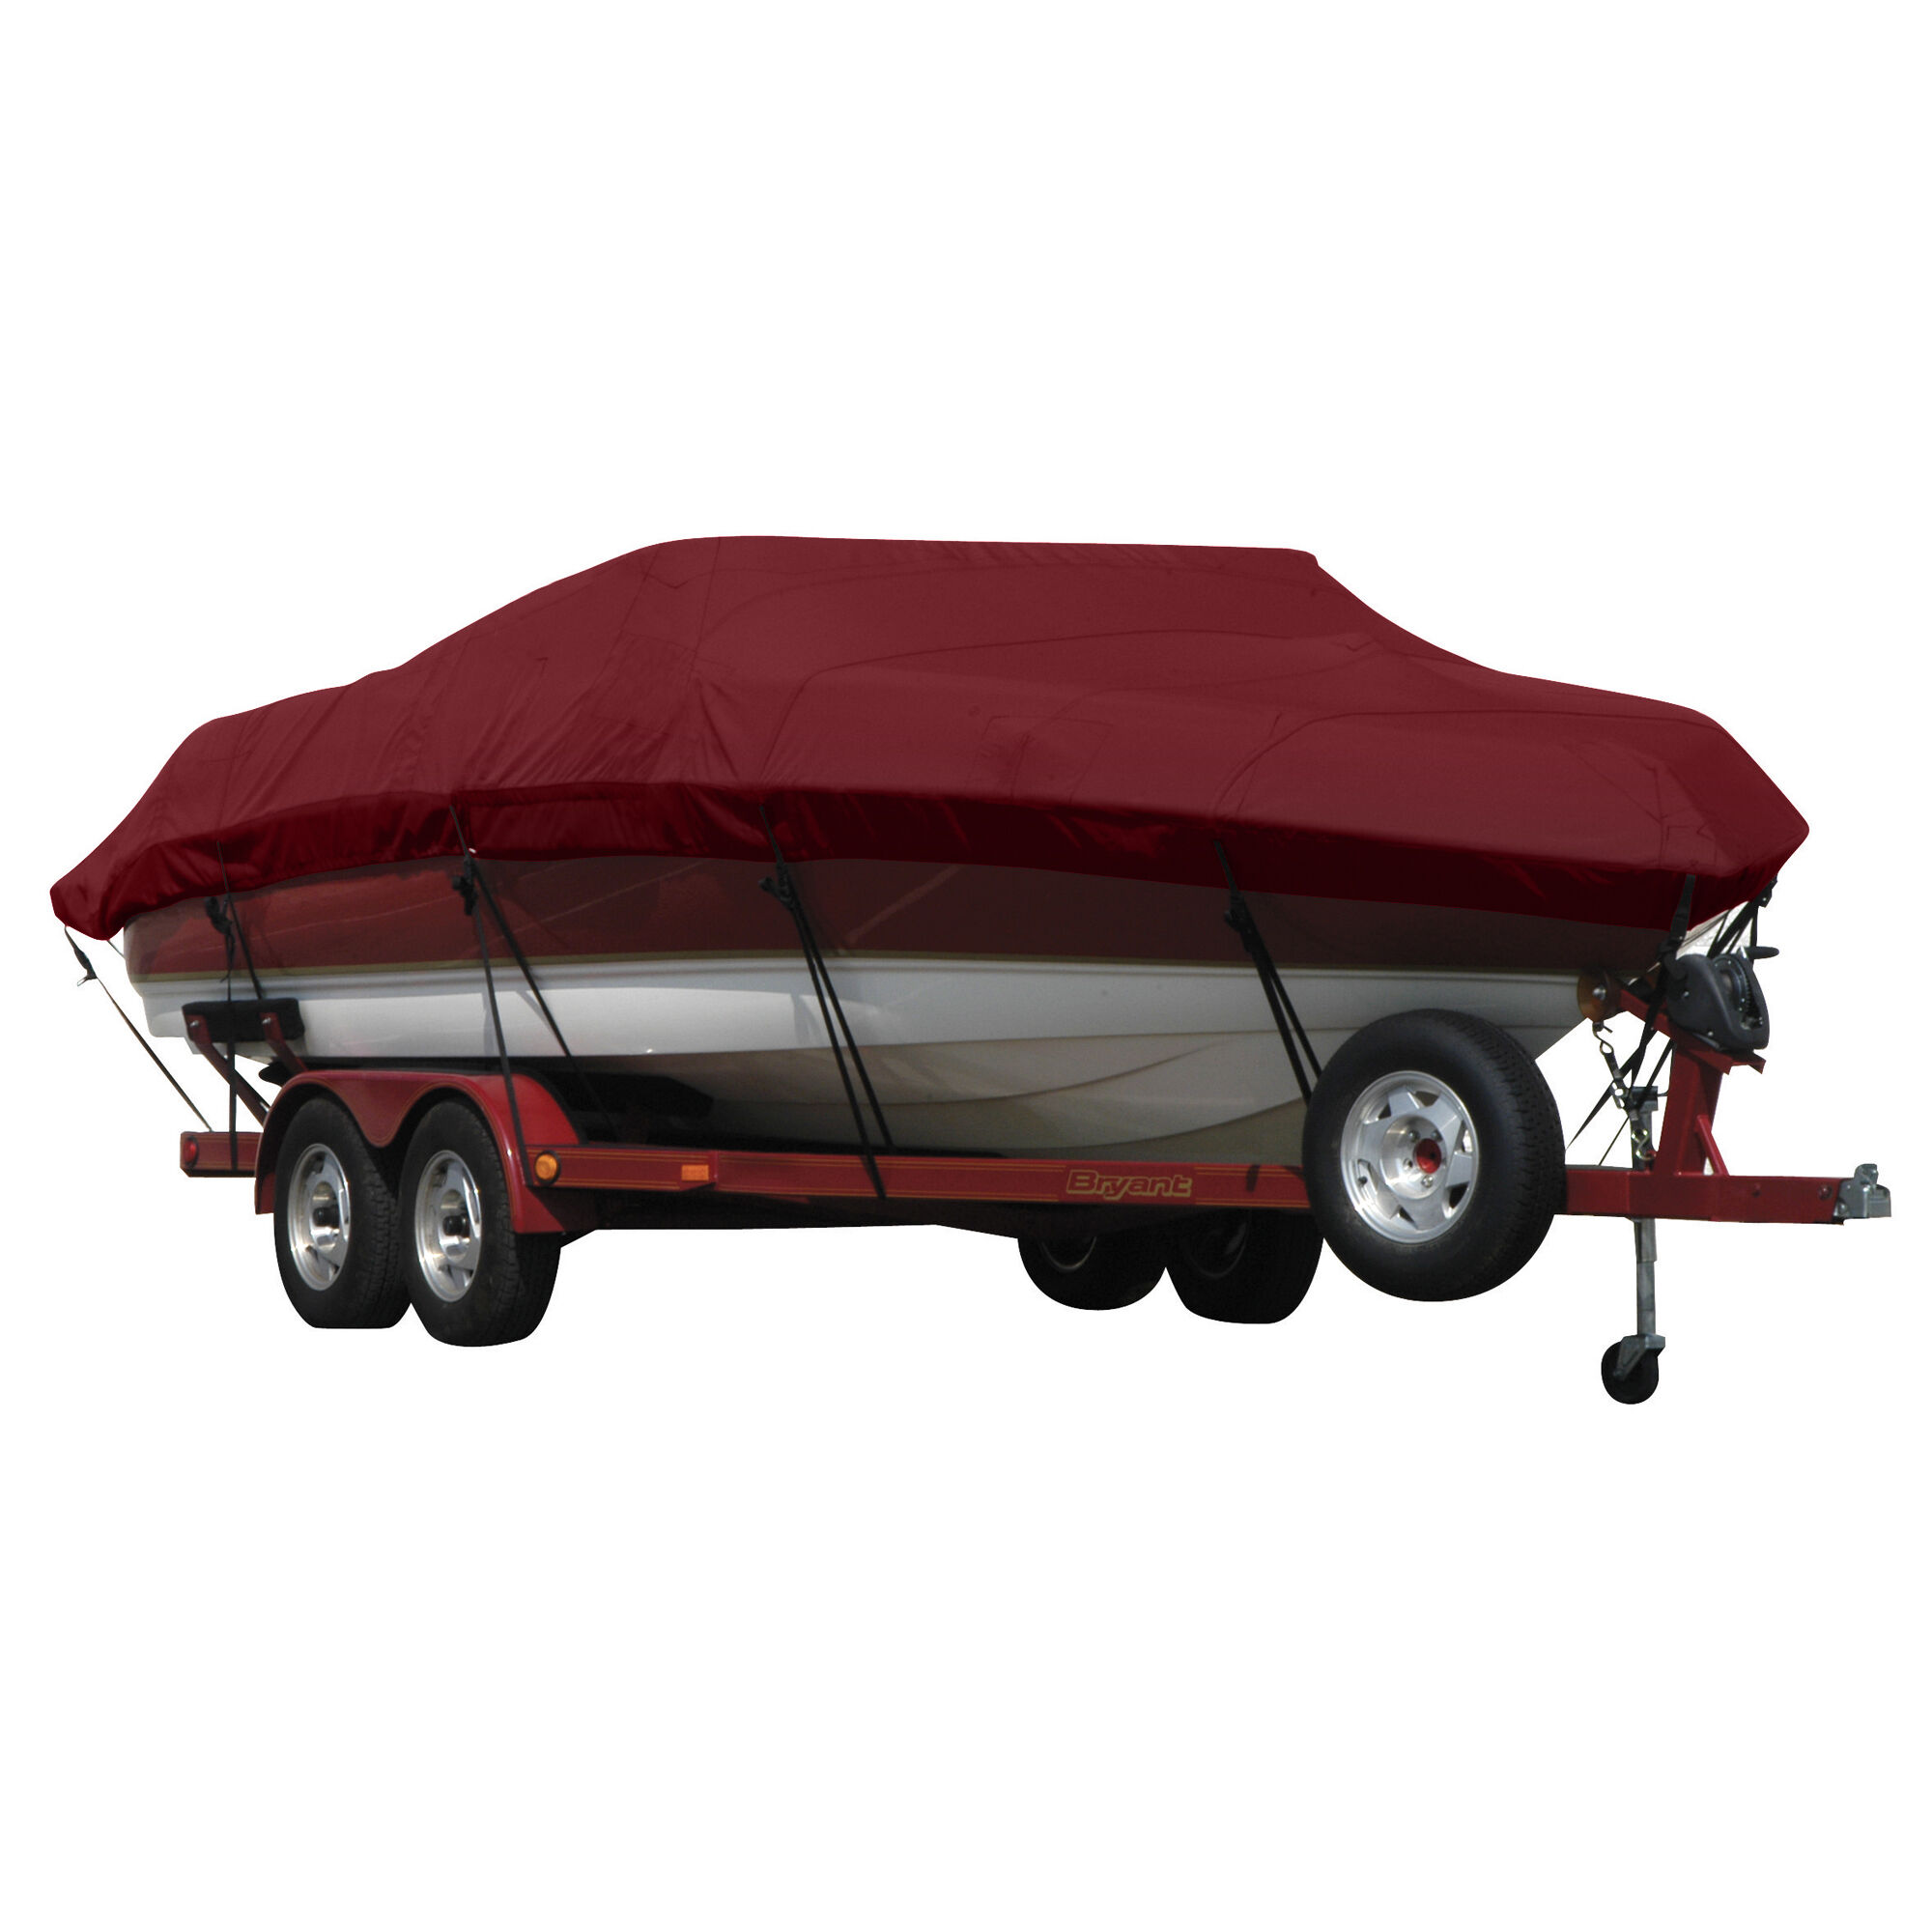 Covermate Exact Fit Sunbrella Boat Cover for Seaswirl Striper 2120 Striper 2120 Cuddy Hard Top No Pulpit I/O. Burgundy